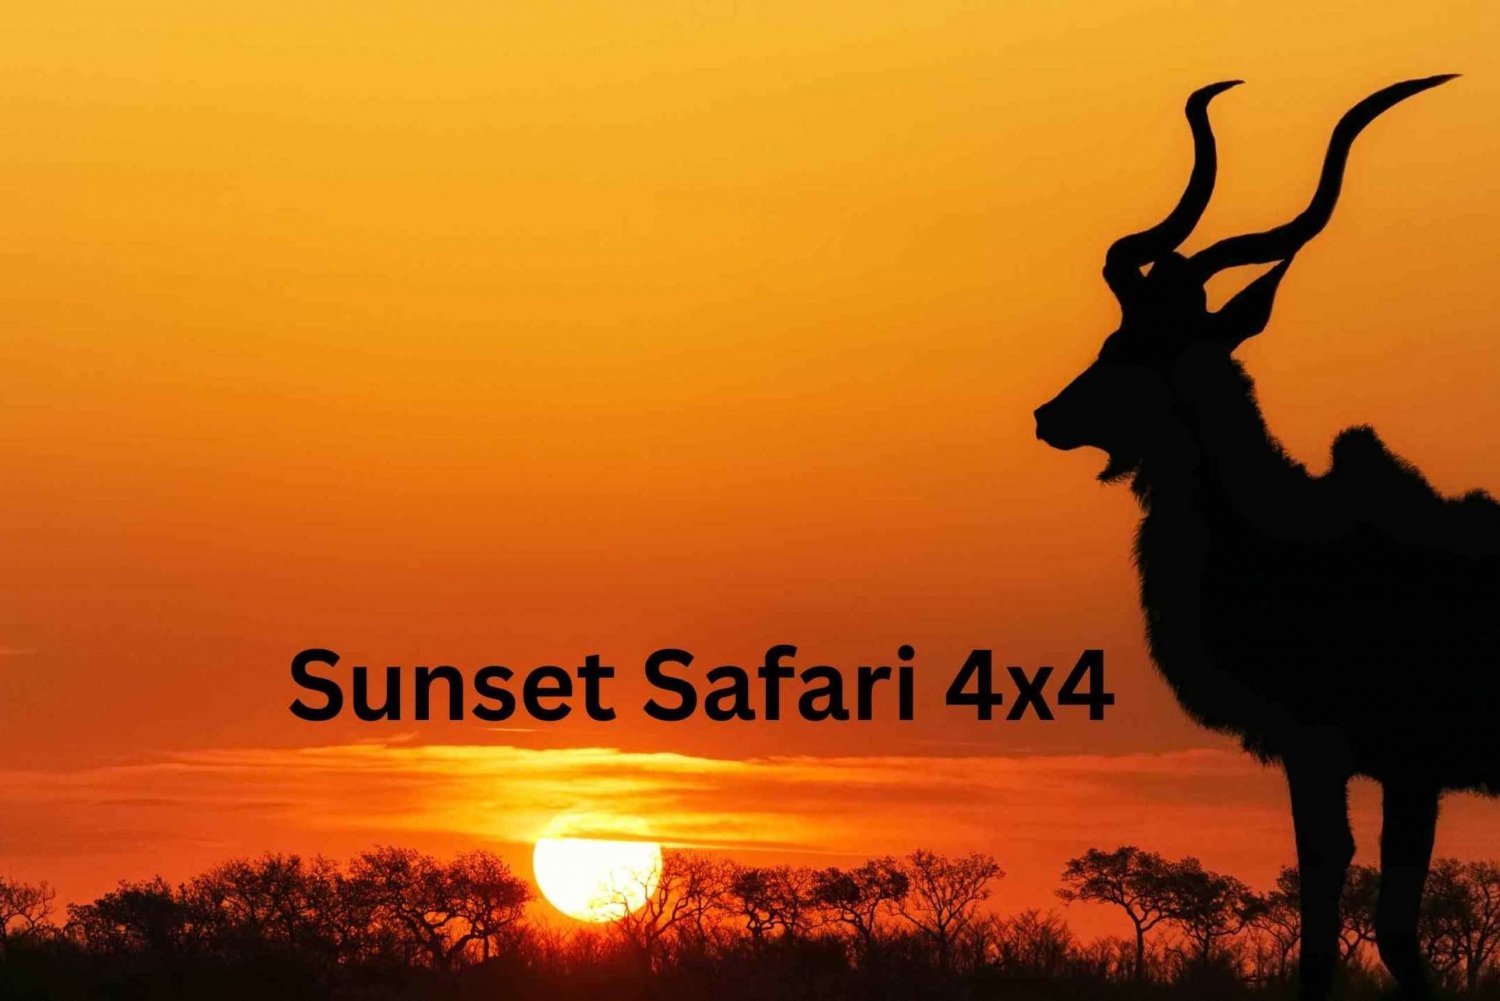 Victoria Falls: Sunset Safari 4x4